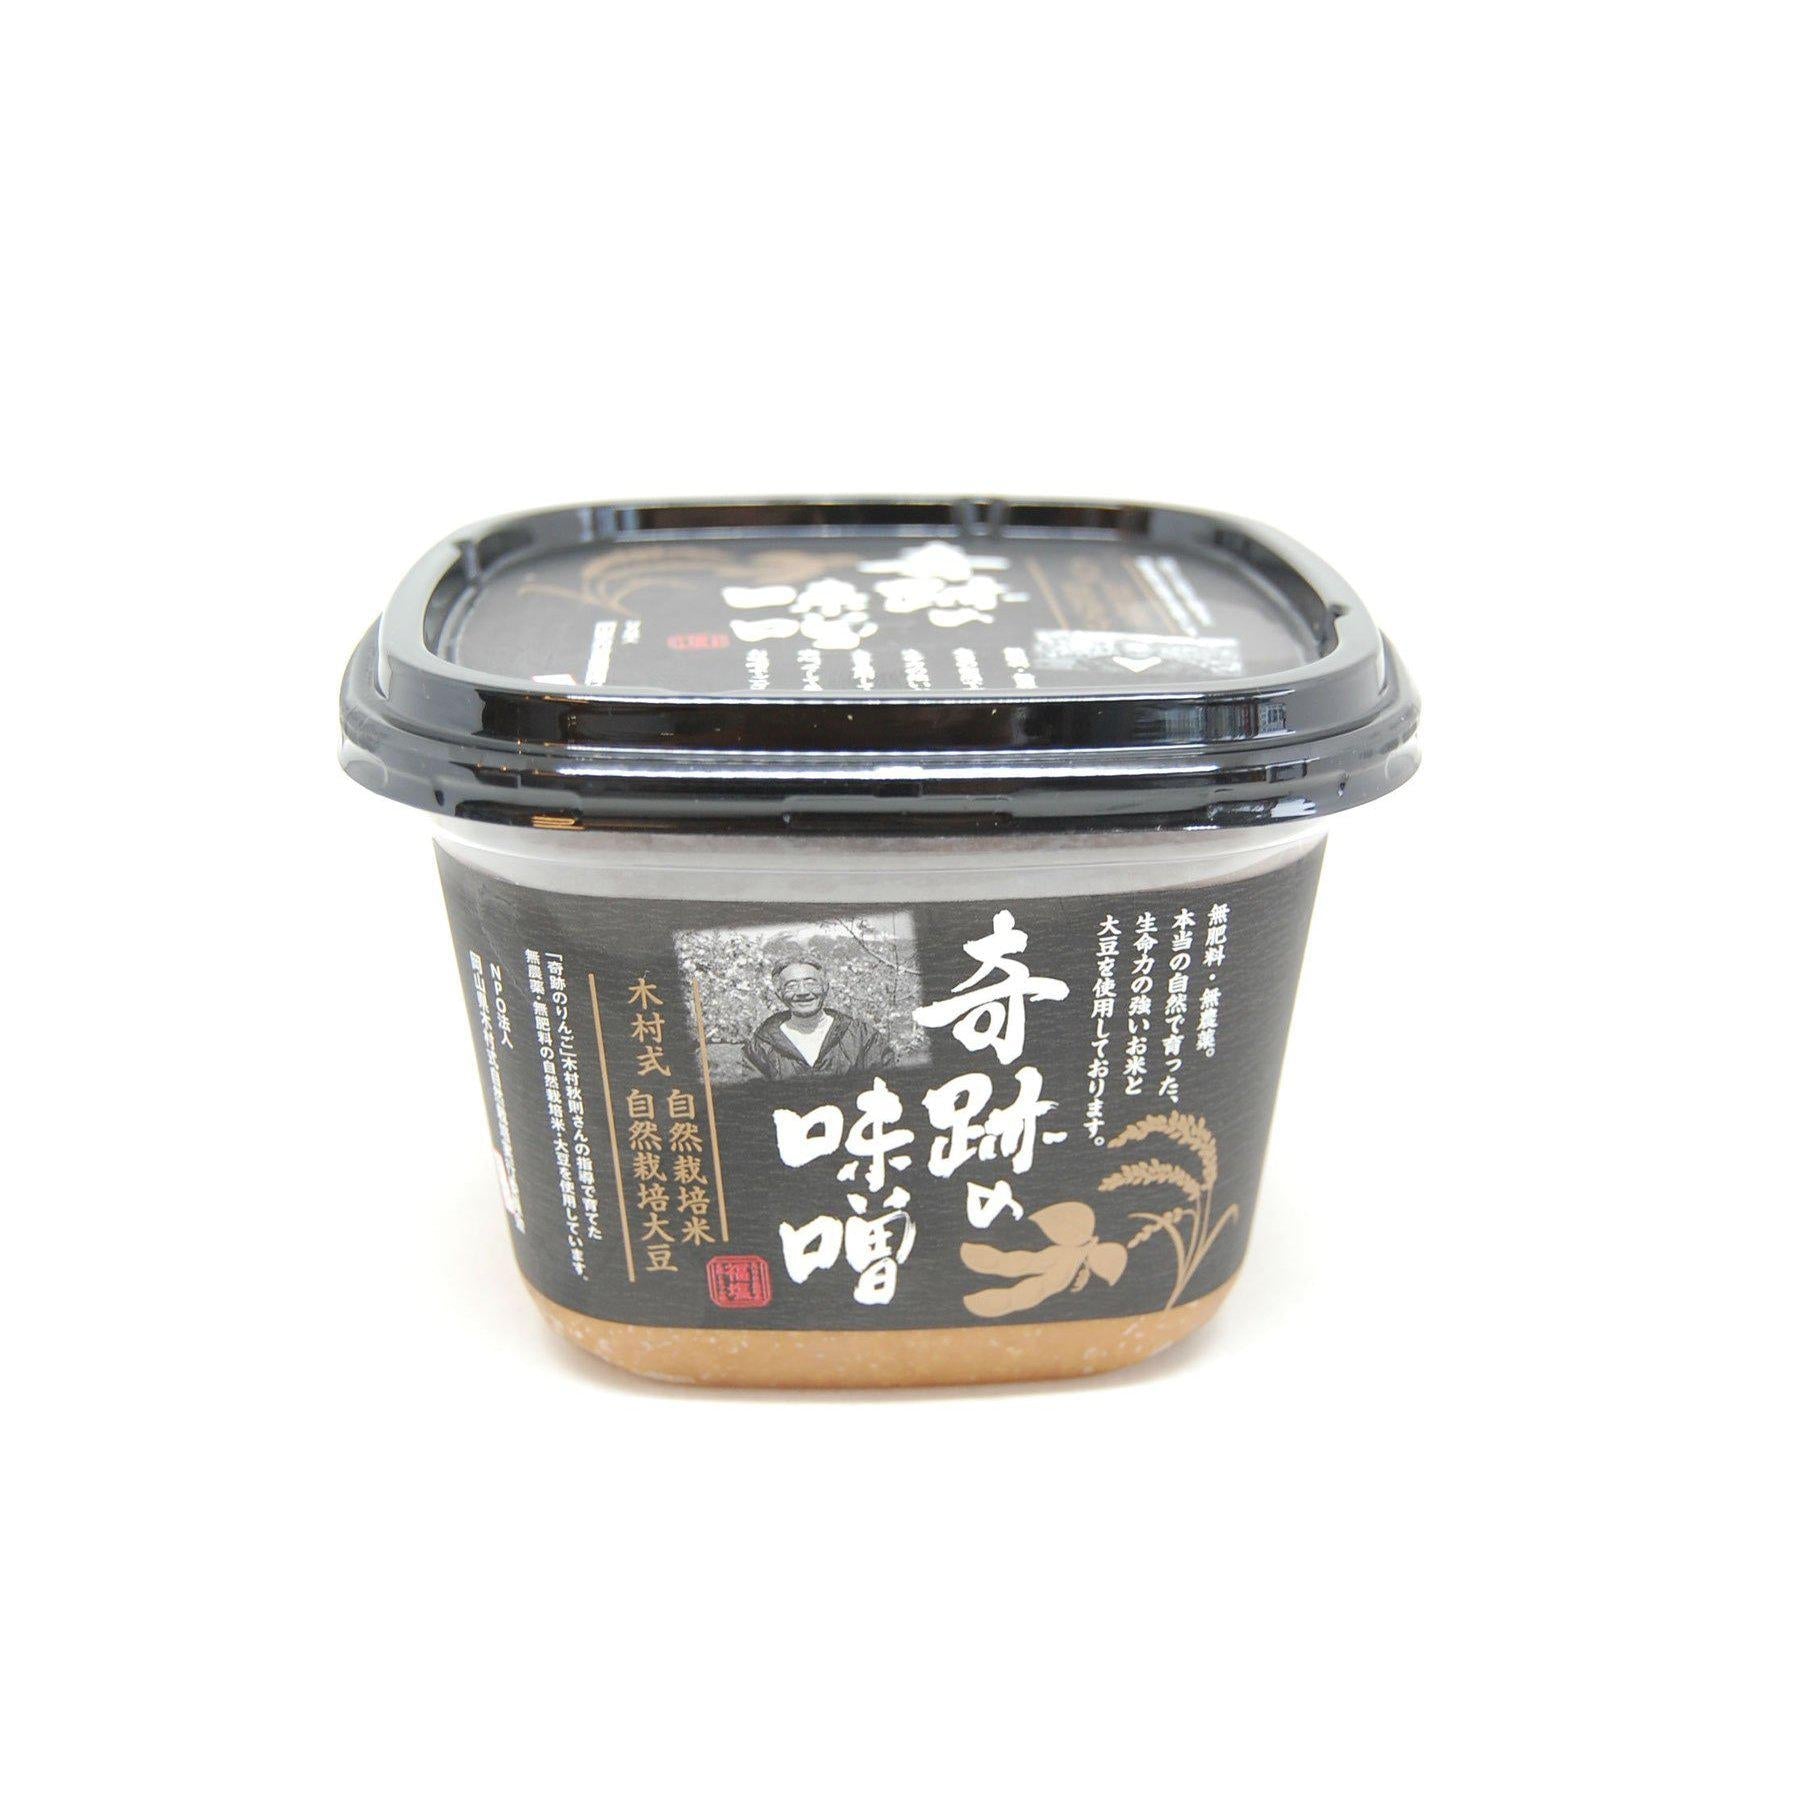 Marumikoji Kiseki Natural Miso (Japanese Miso Paste) 750g